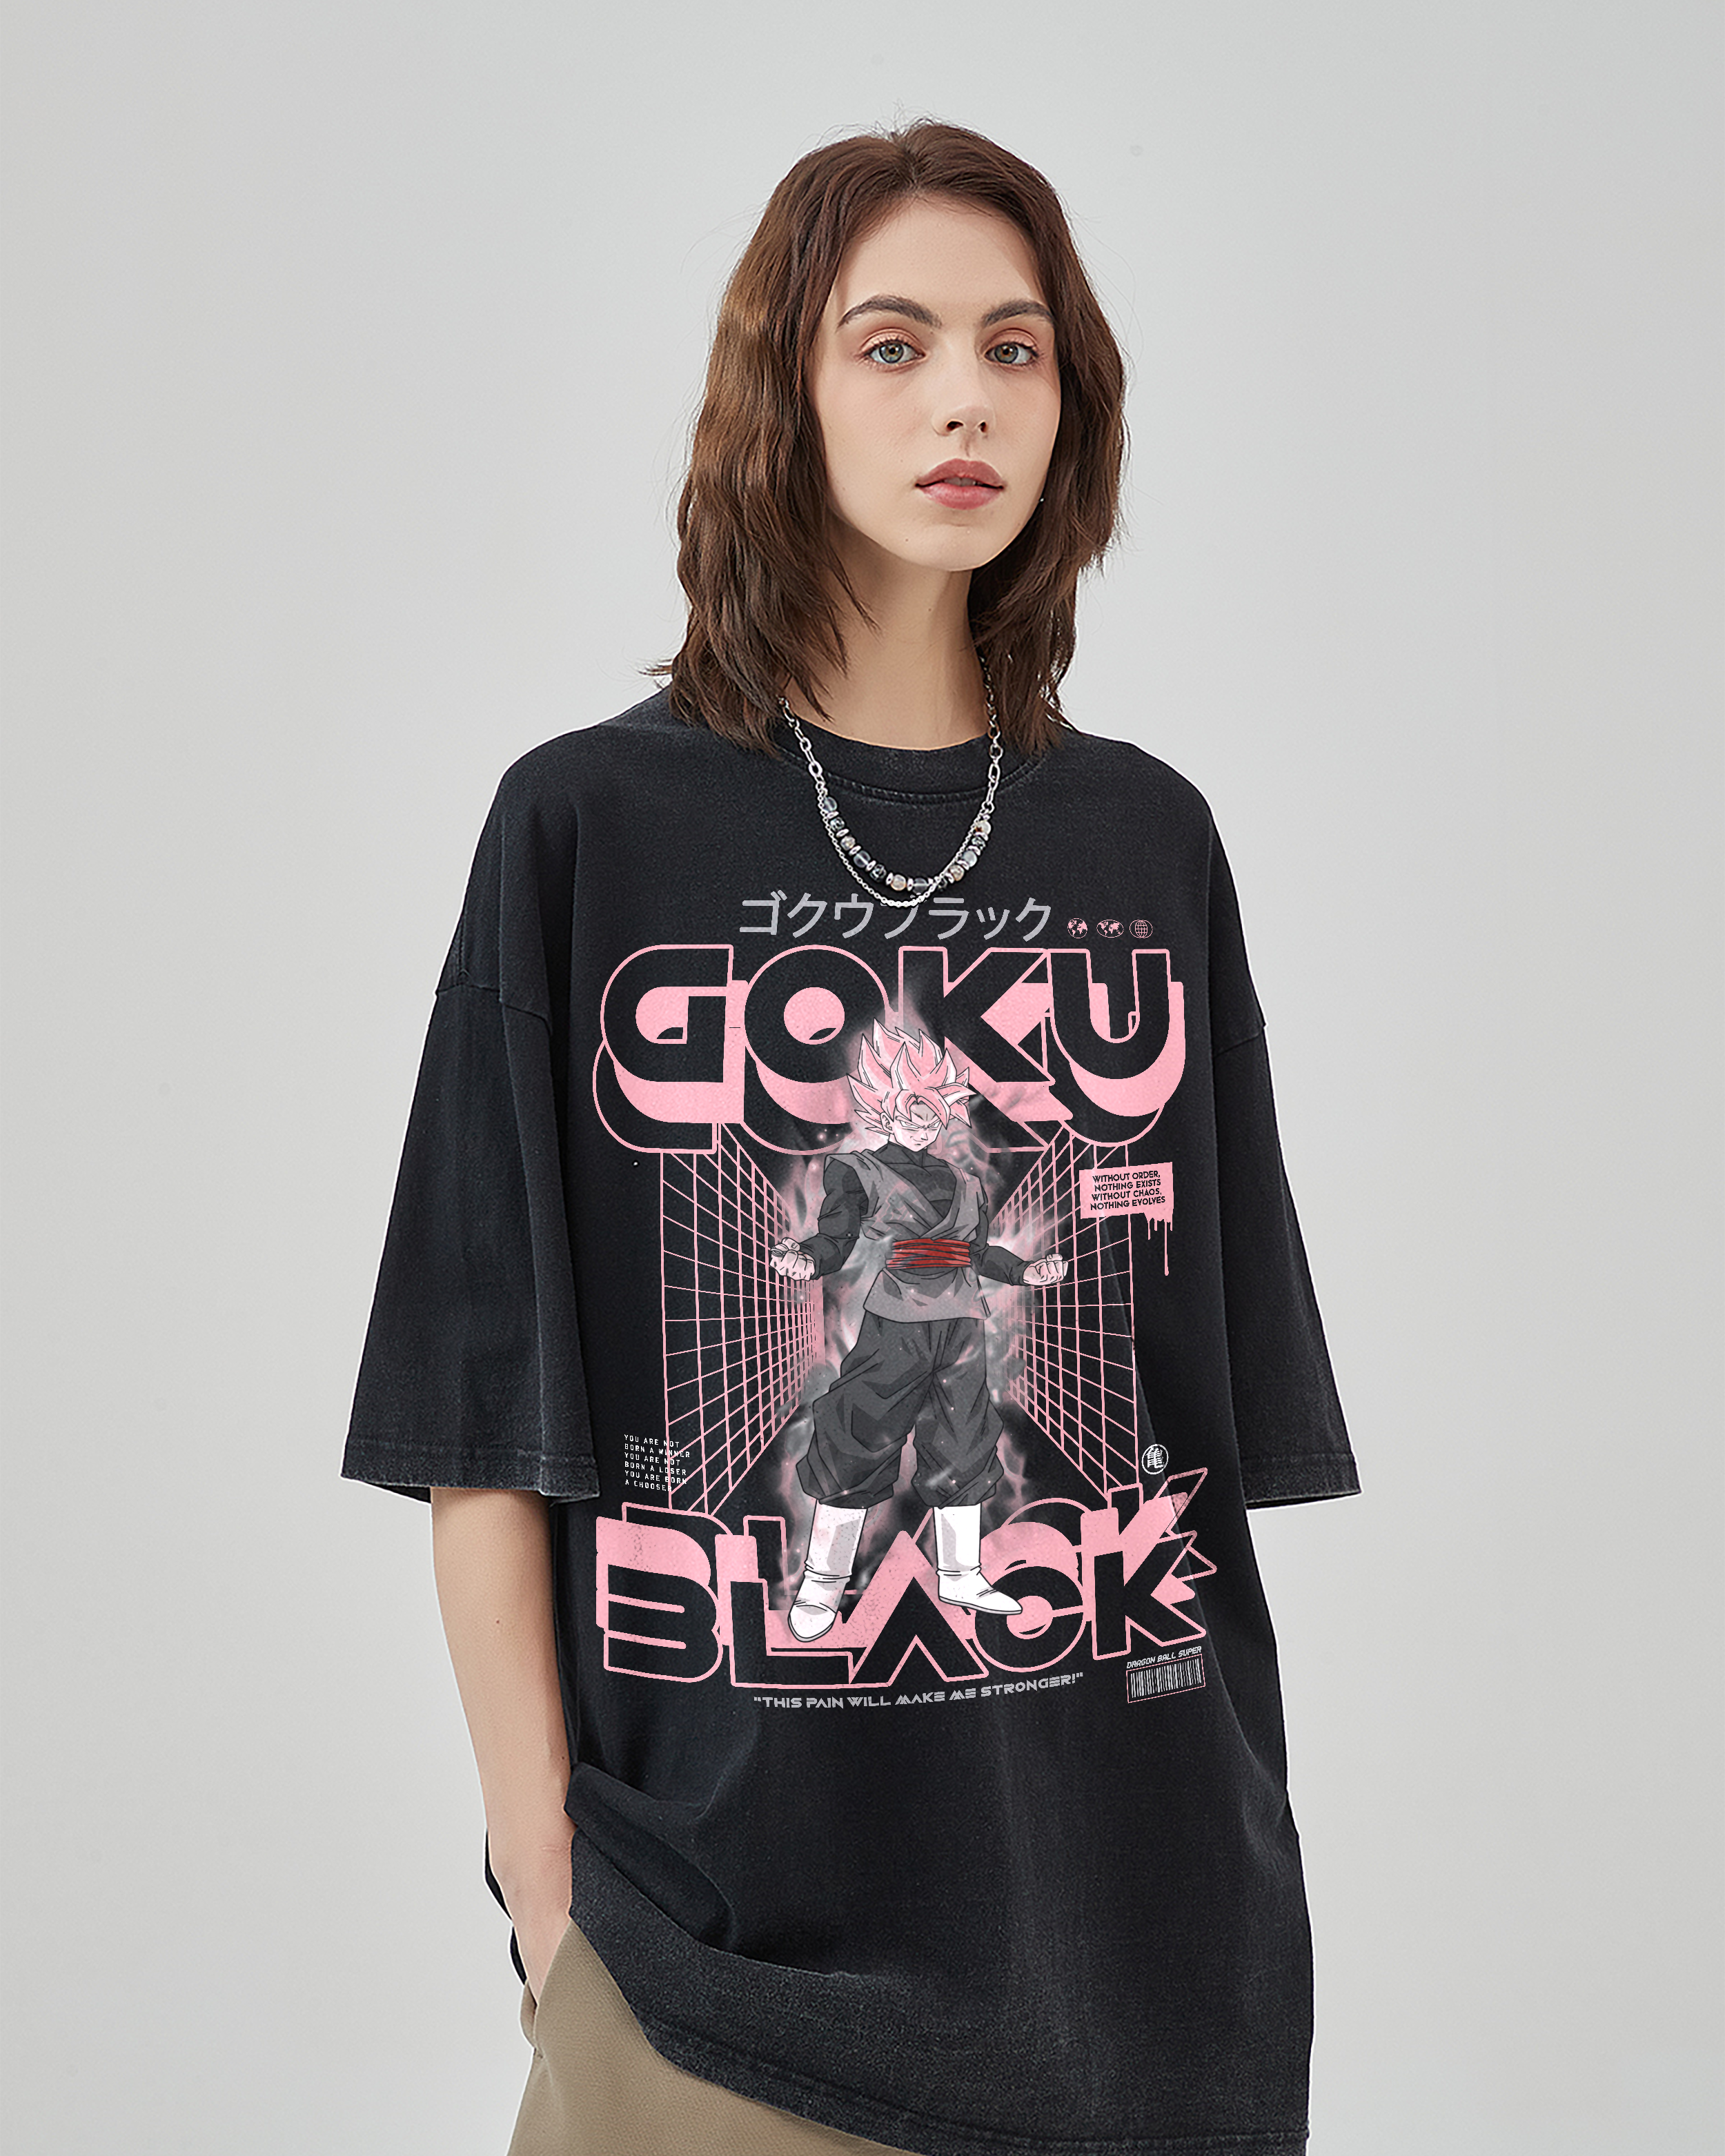 Goku Black Vintage Oversized T-Shirt